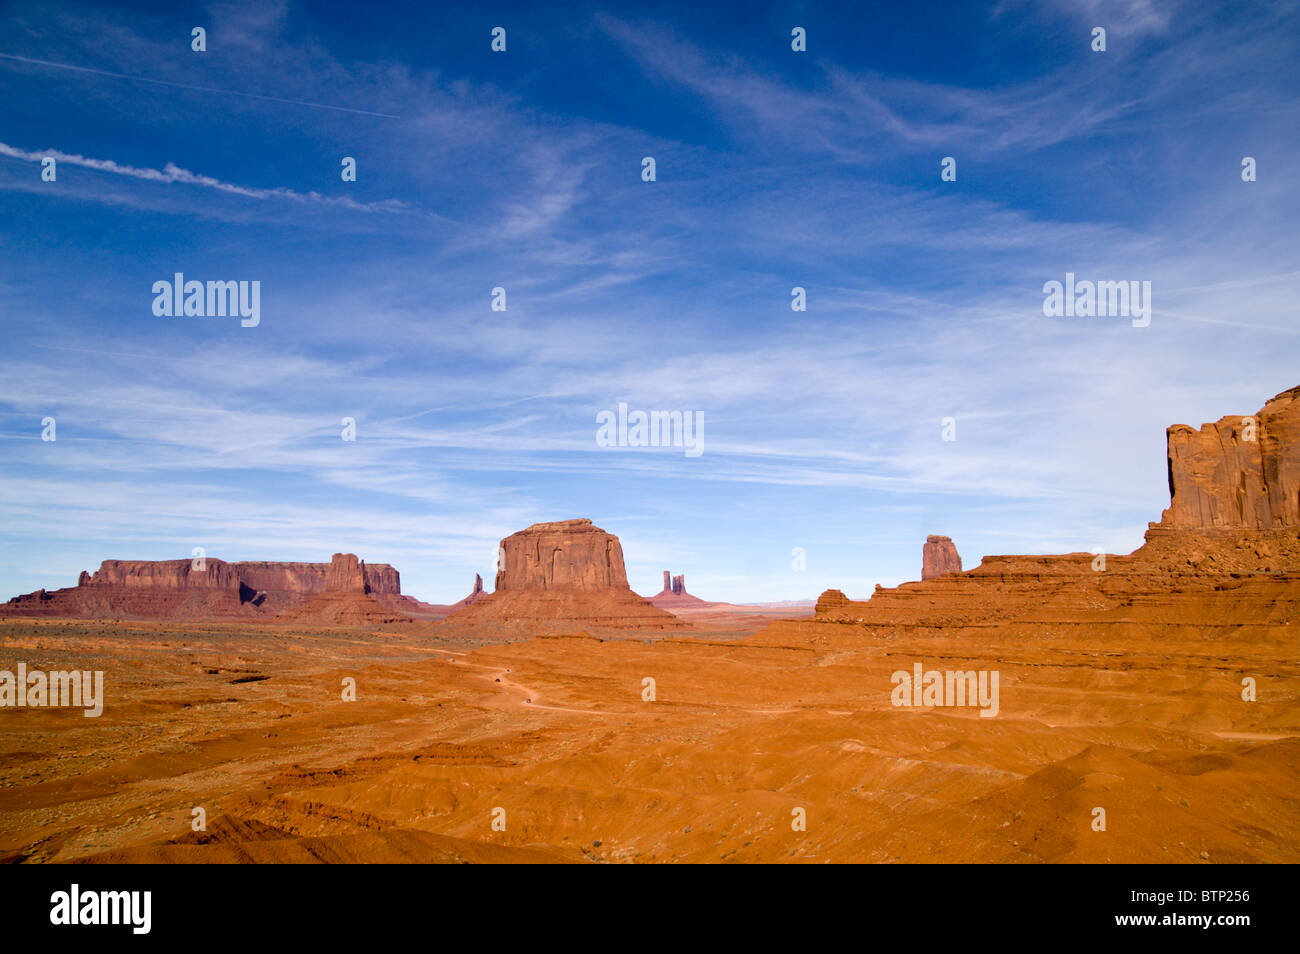 Monument Valley Navajo Tribal Park, Utah / Arizona, USA Stock Photo